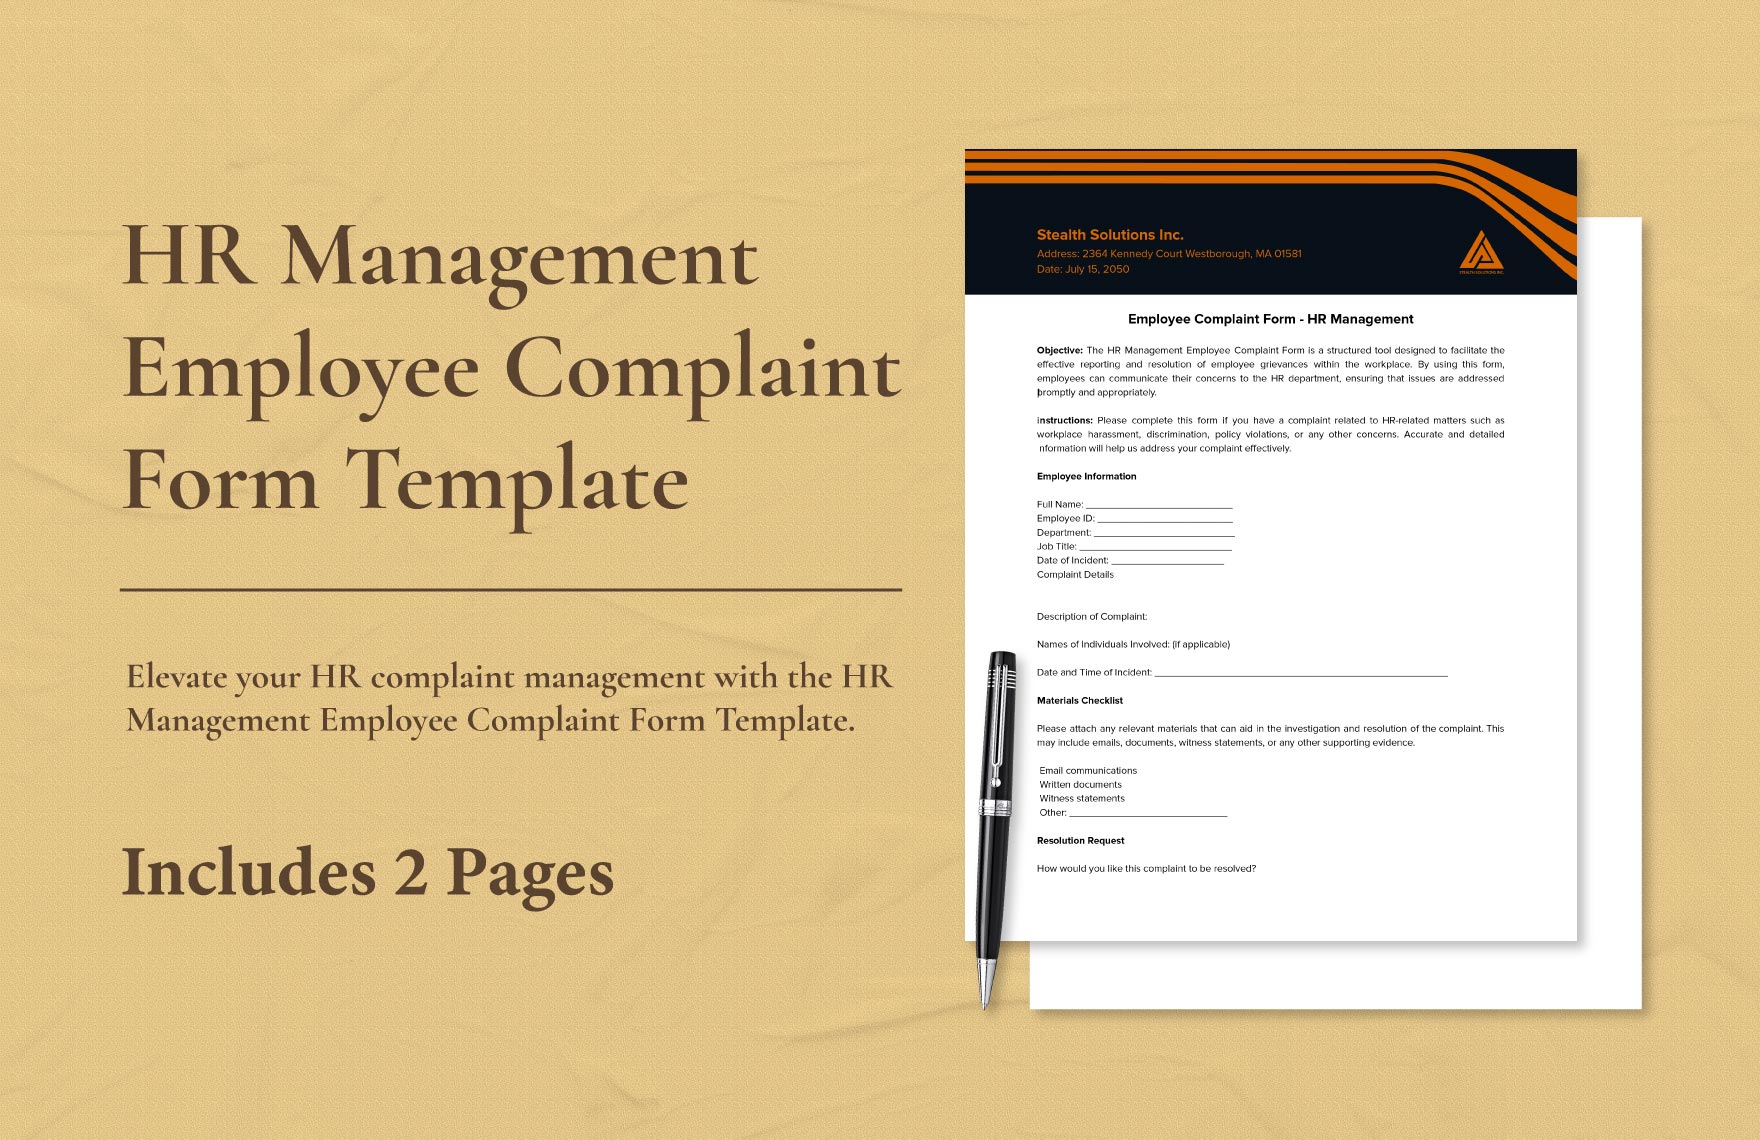 HR Management Employee Complaint Form Template